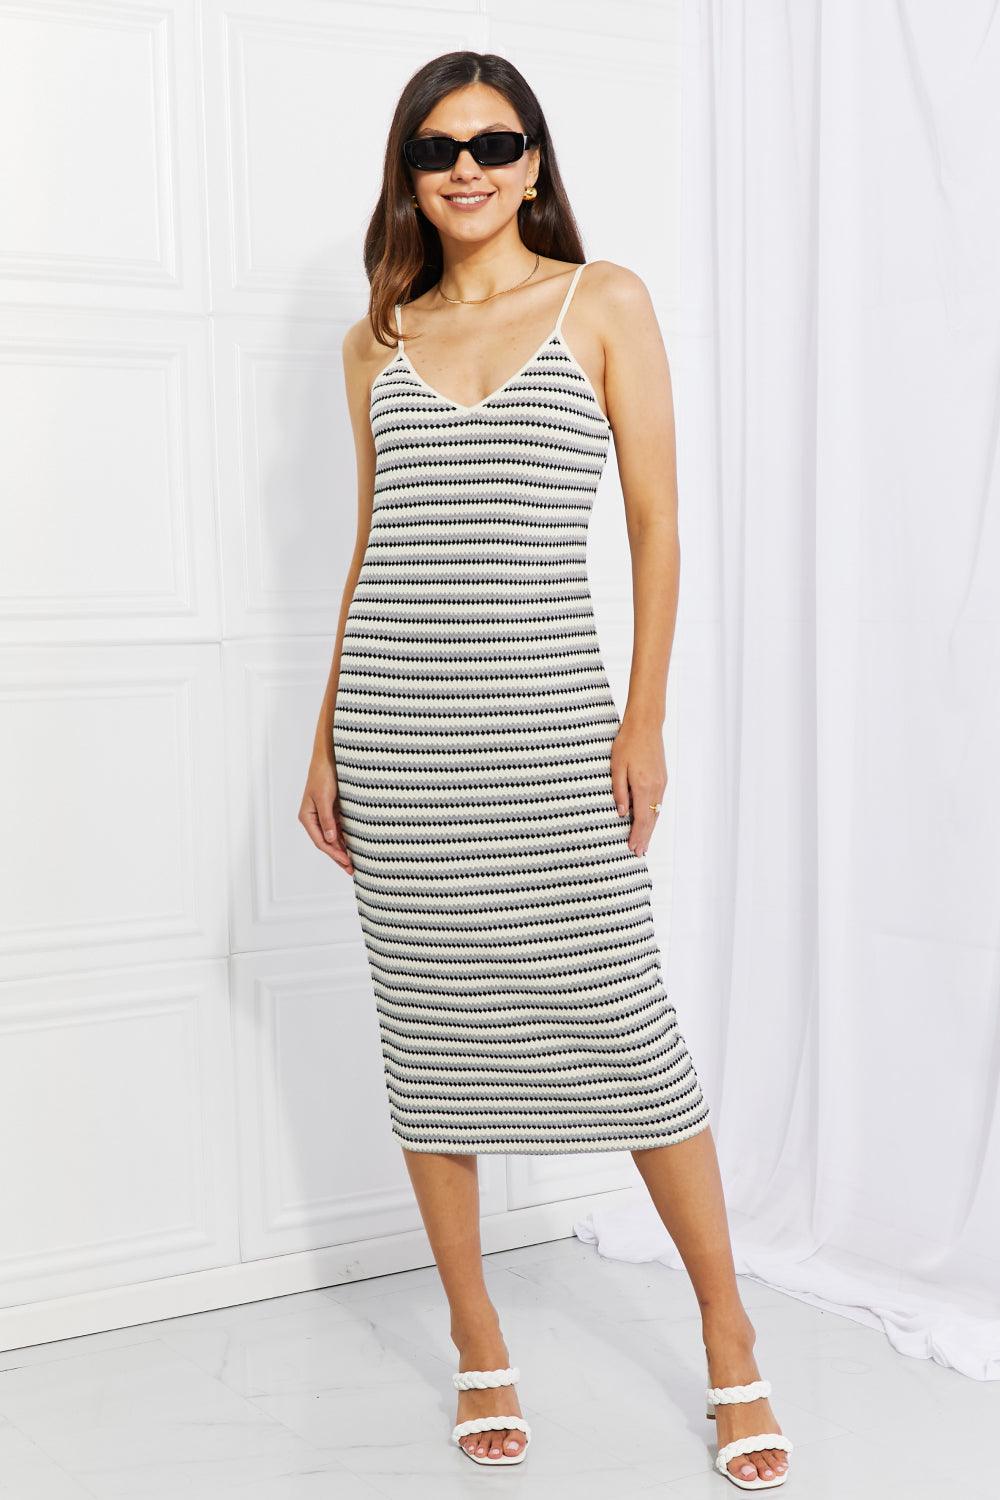 HYFVE One to Remember Striped Sleeveless Midi Dress - Glamorous Boutique USA L.L.C.